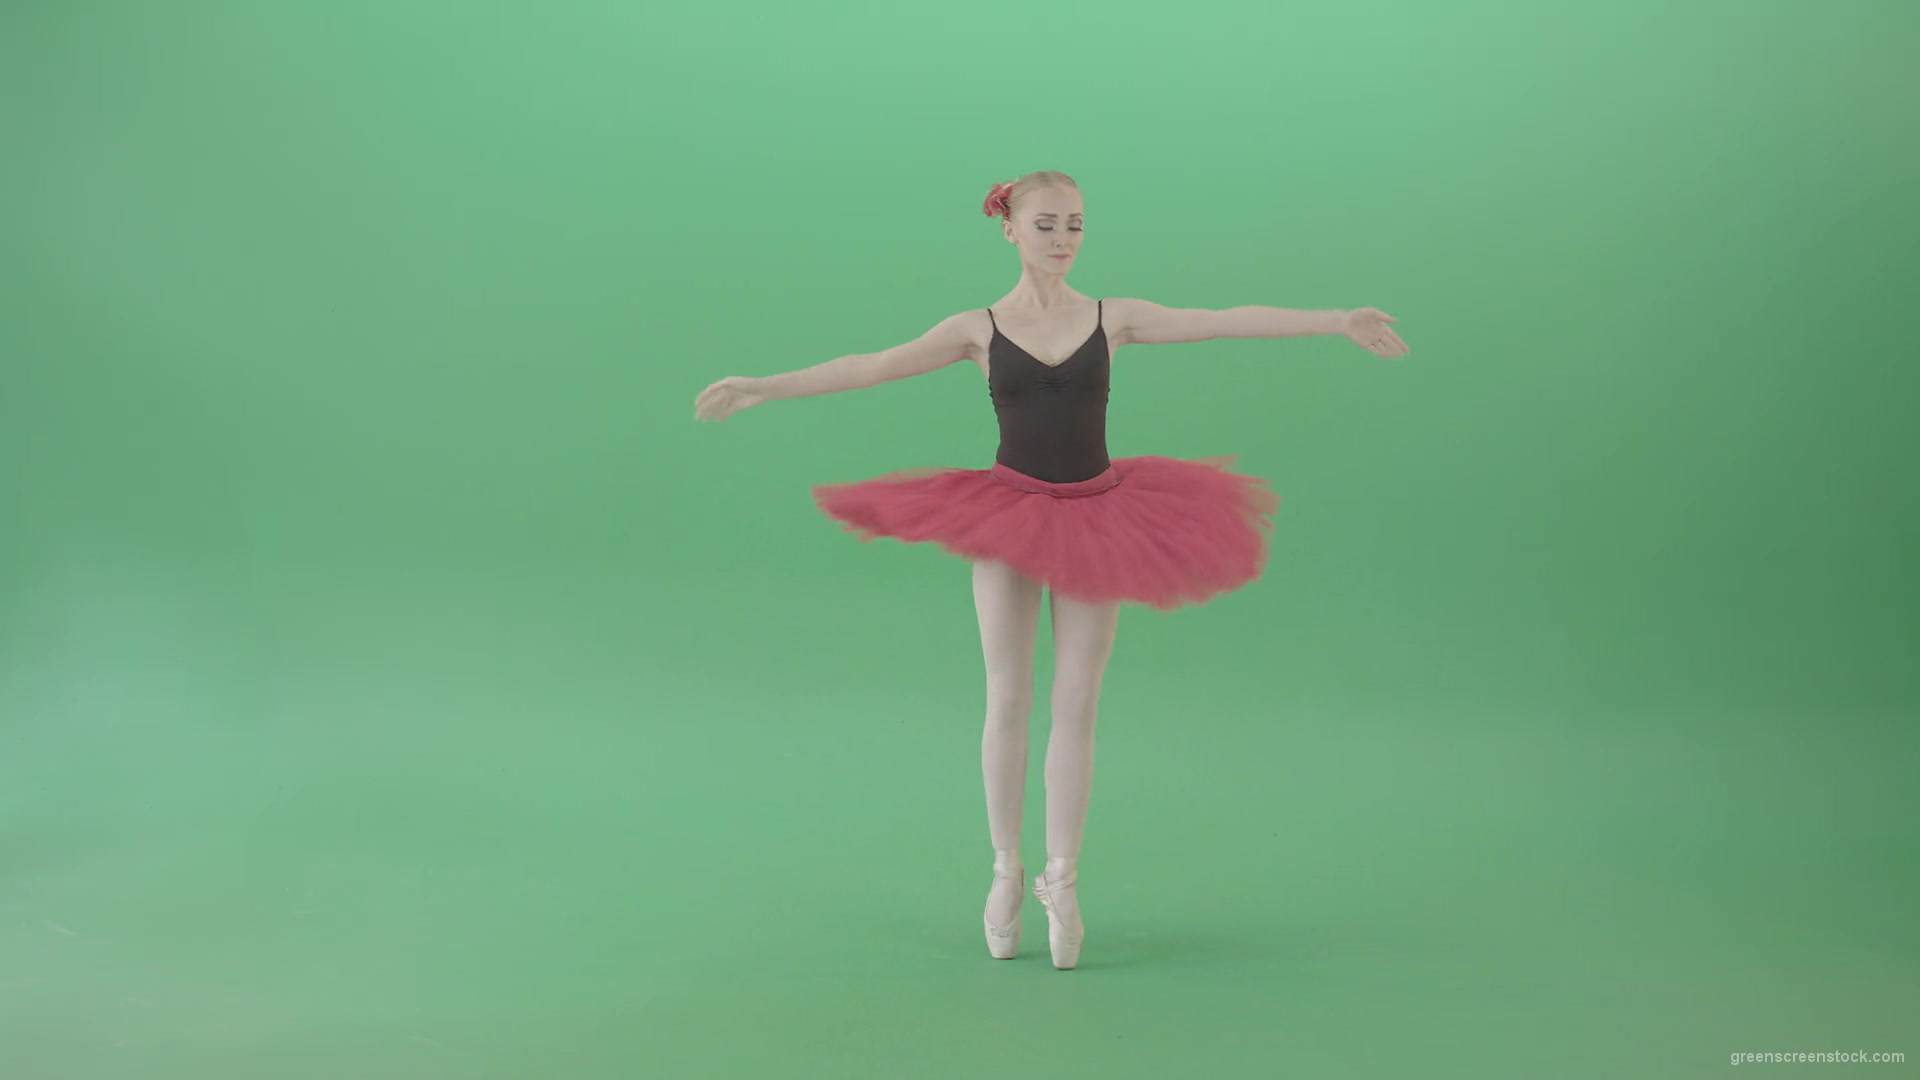 Classical-Ballerina-girl-dancing-red-black-ballet-on-green-screen-4K-Video-Footage-1920_002 Green Screen Stock